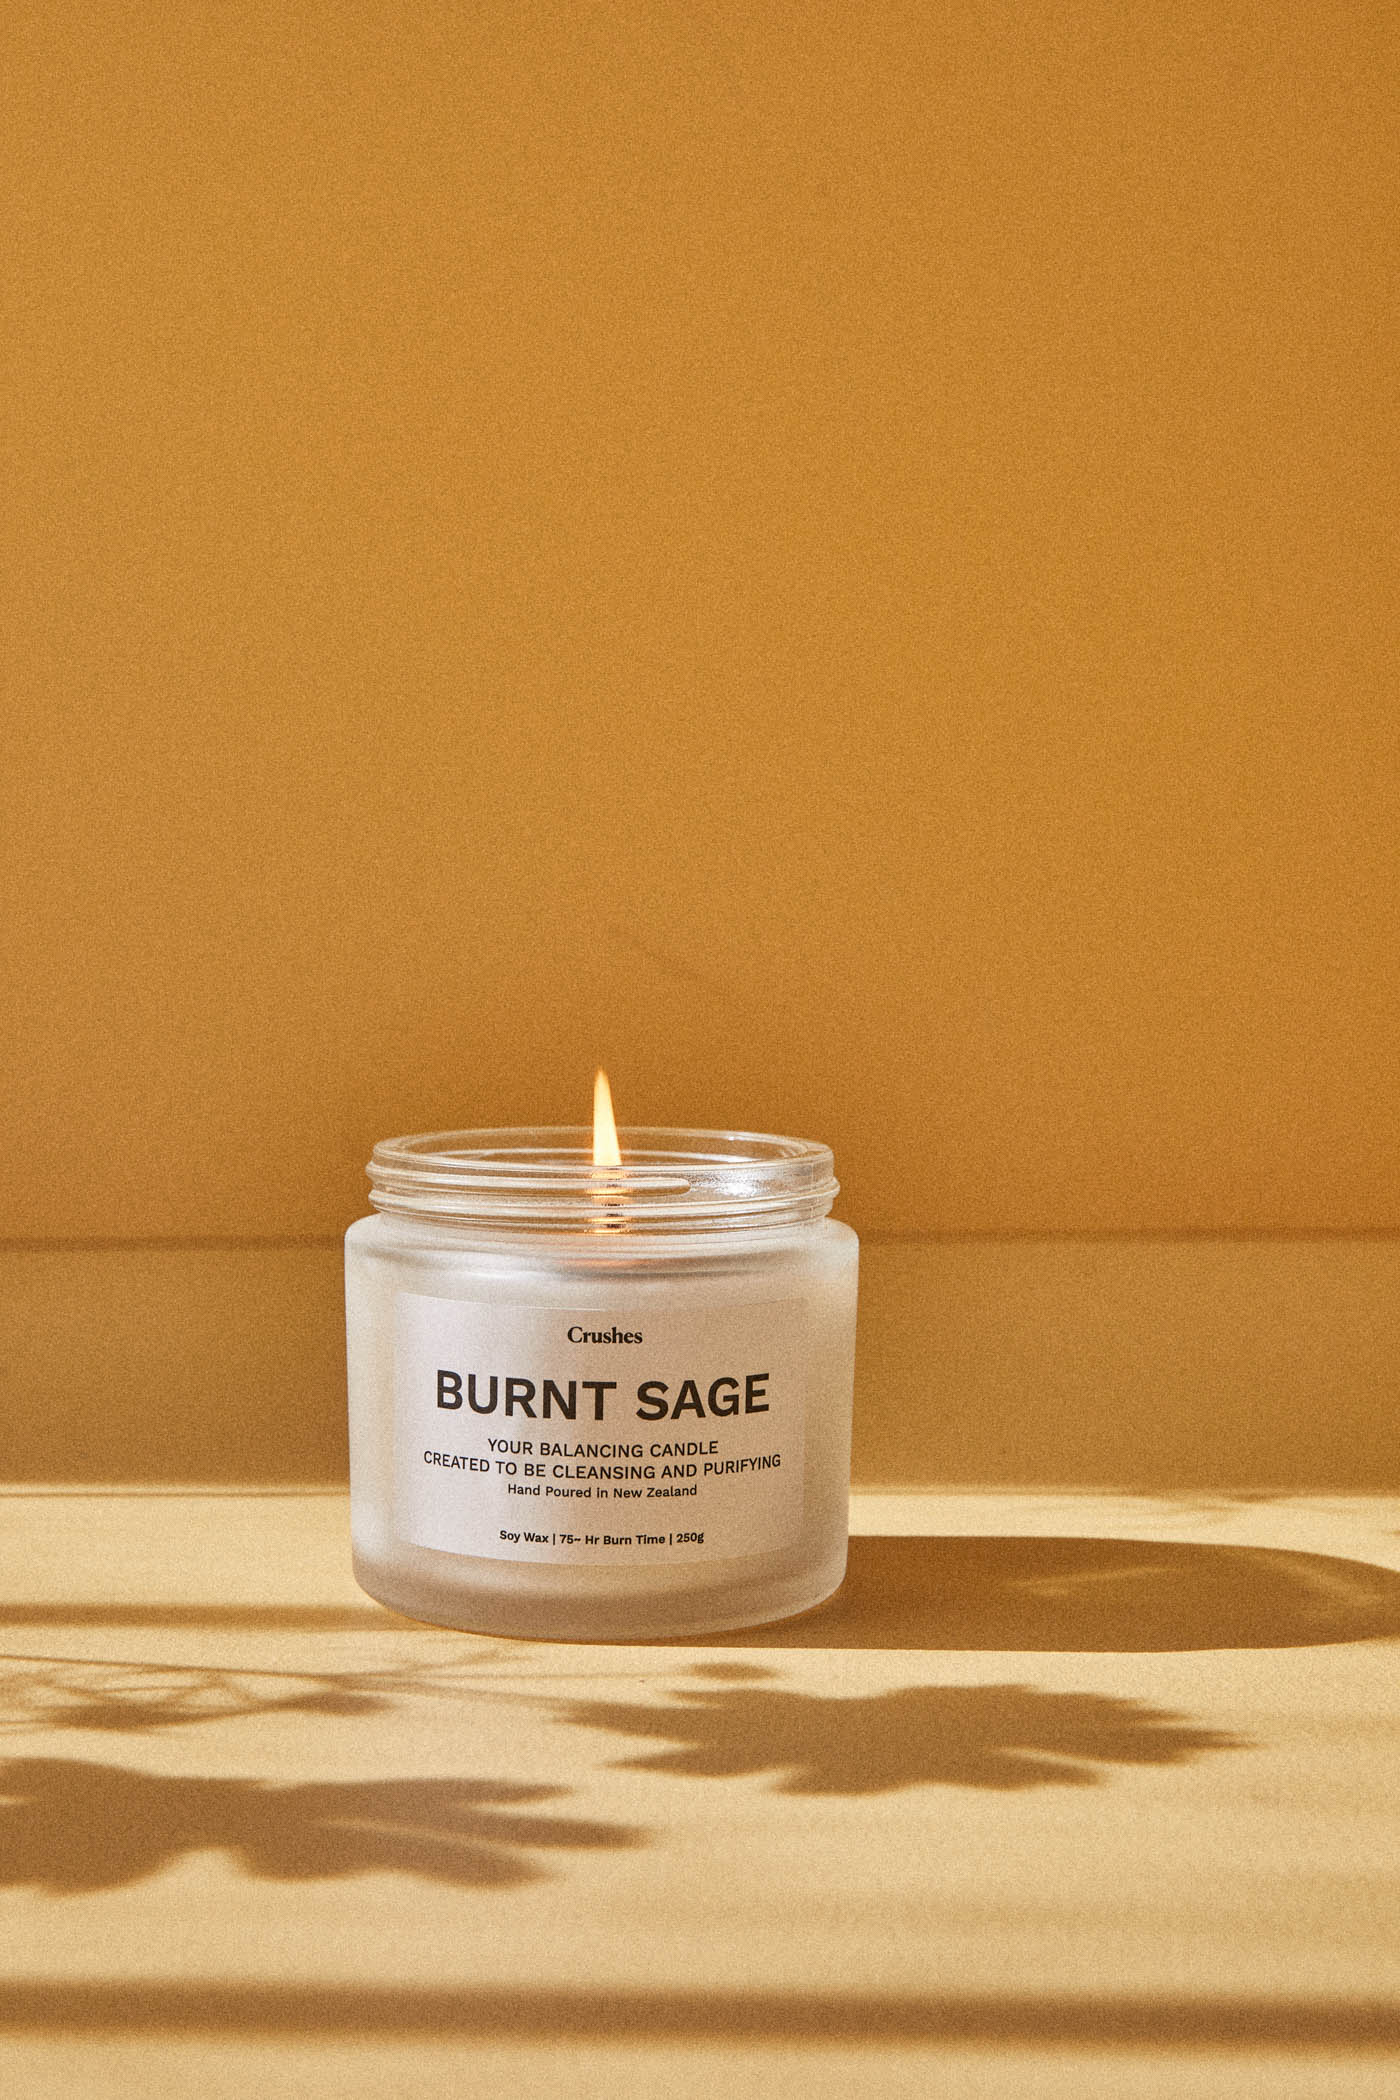 Burnt Sage - Balancing Candle